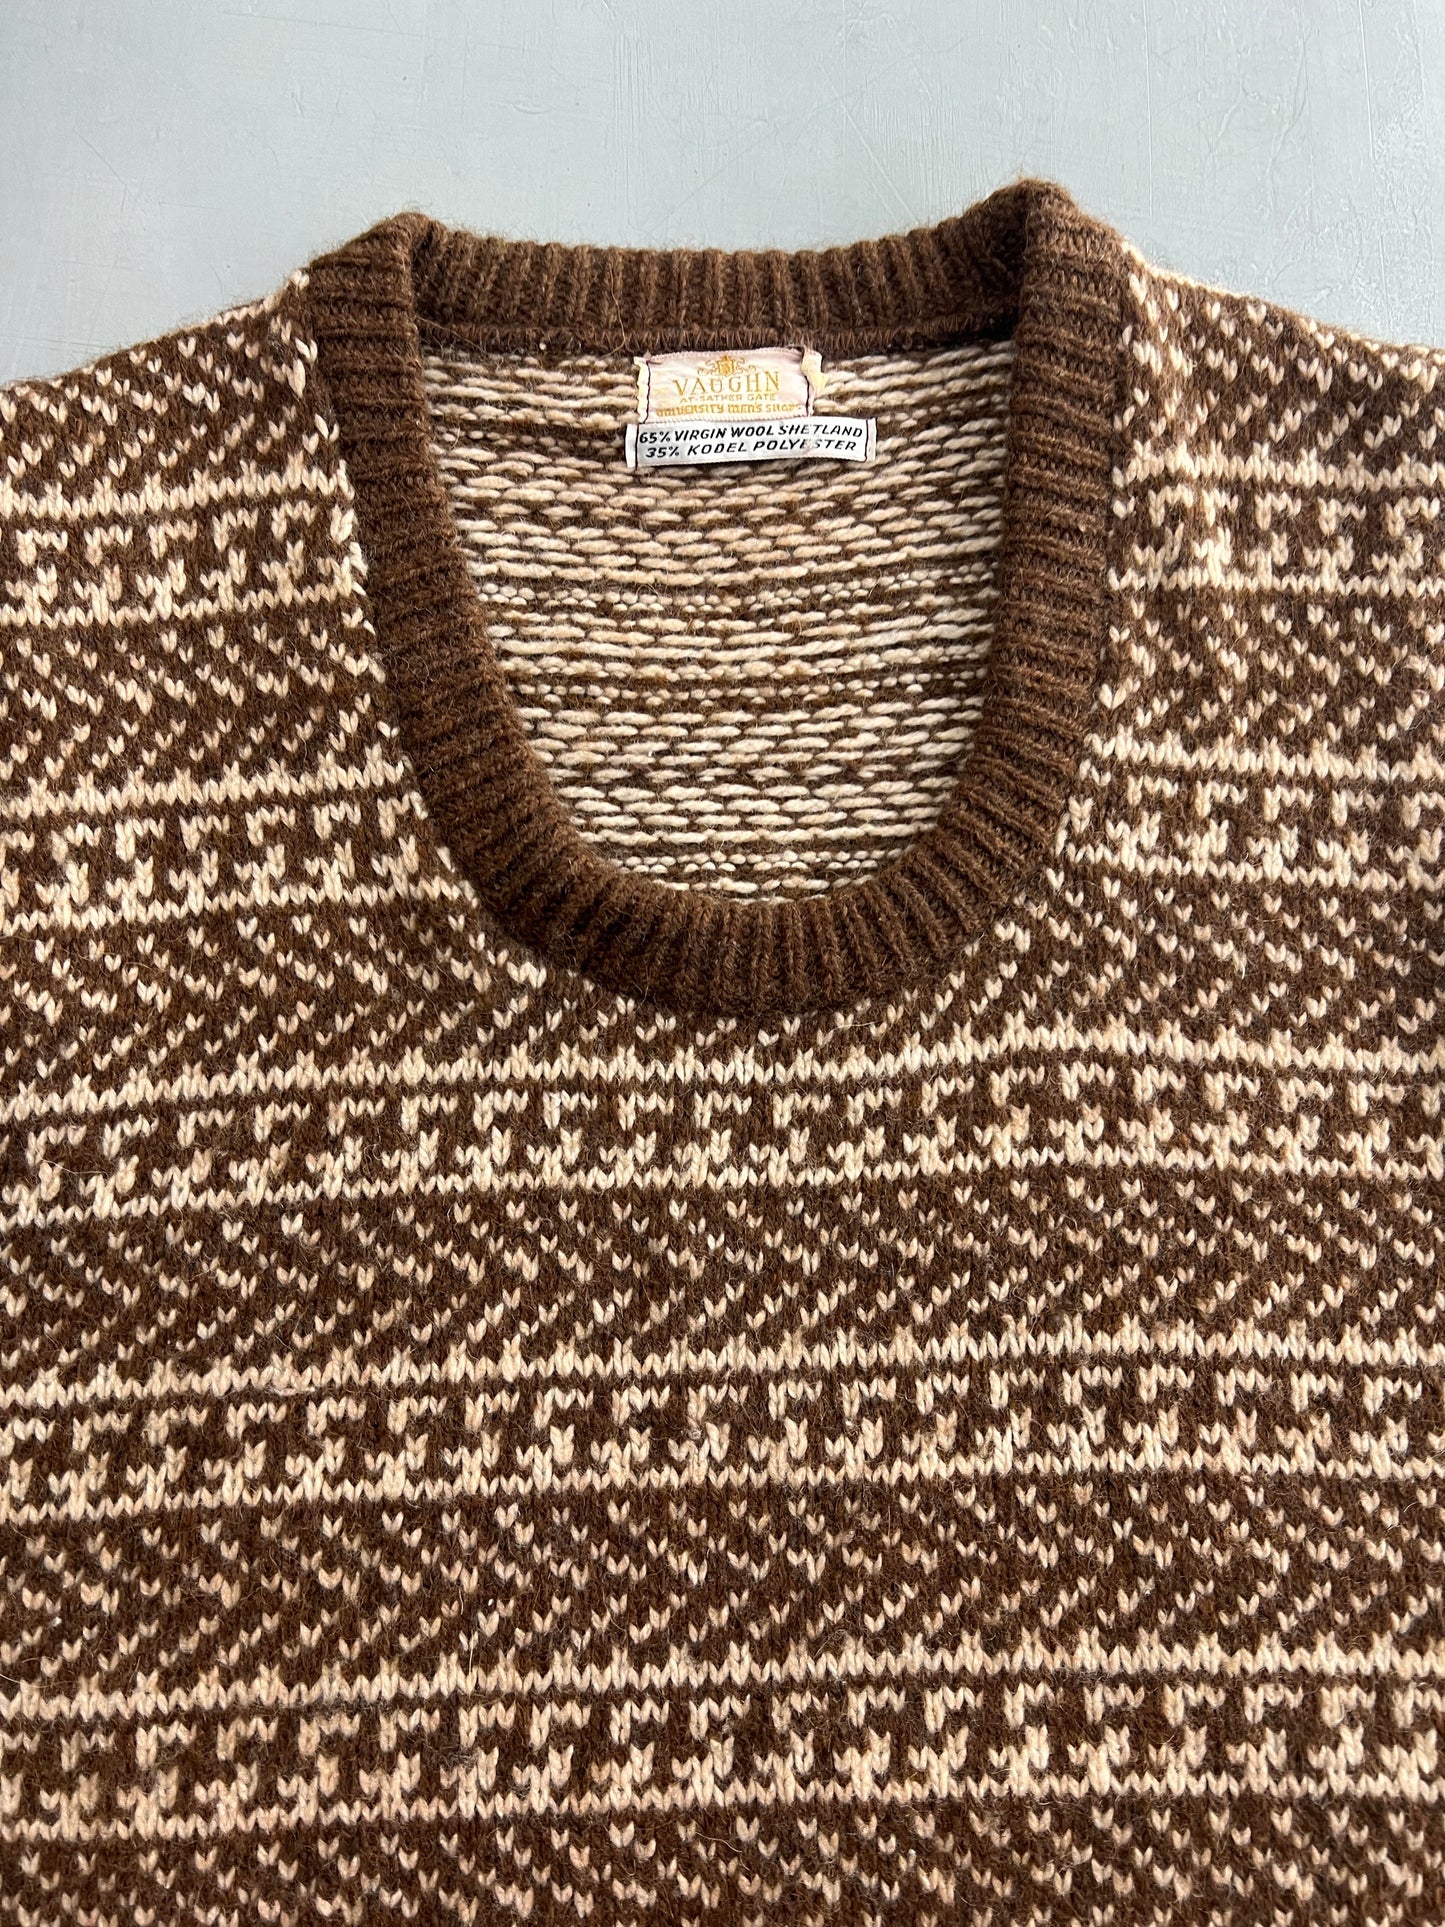 Vaughn Sweater Vest [M]